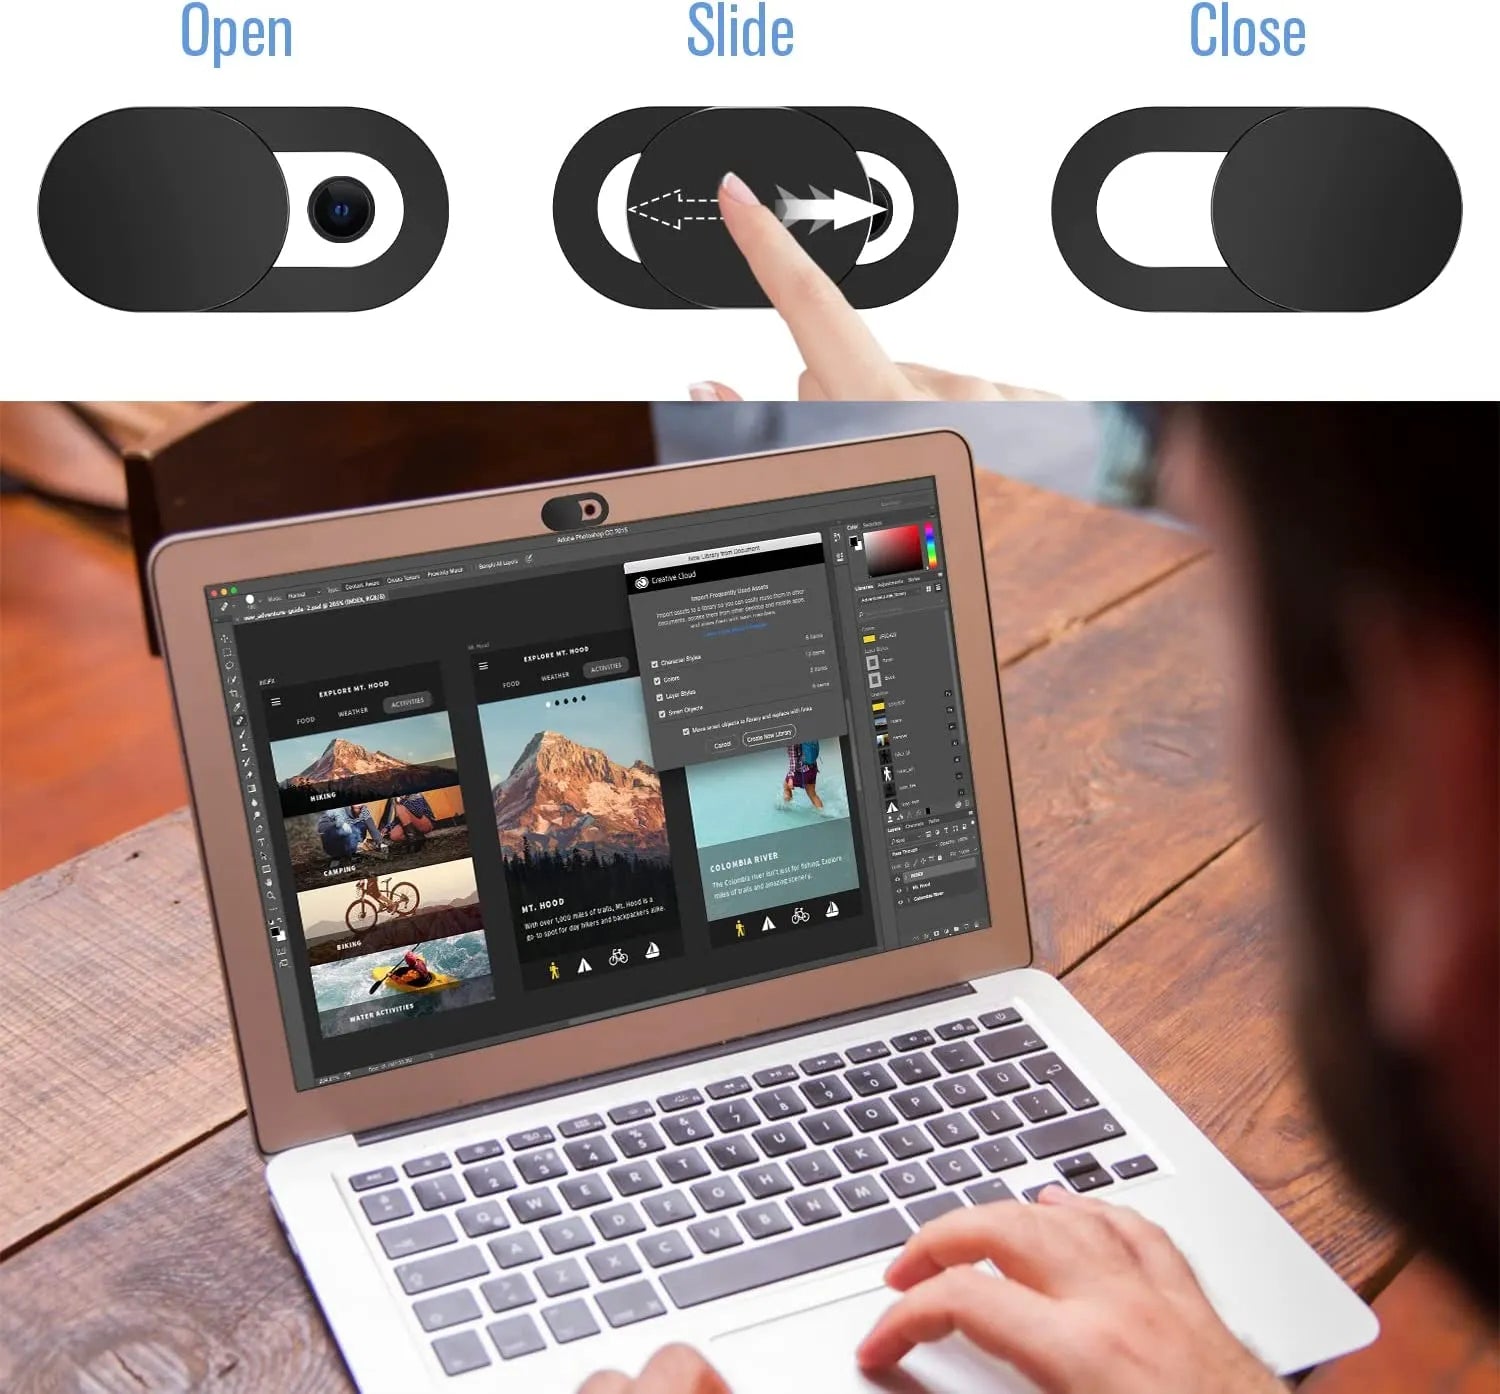 Magnet Slider Webcam Cover for Privacy Protection